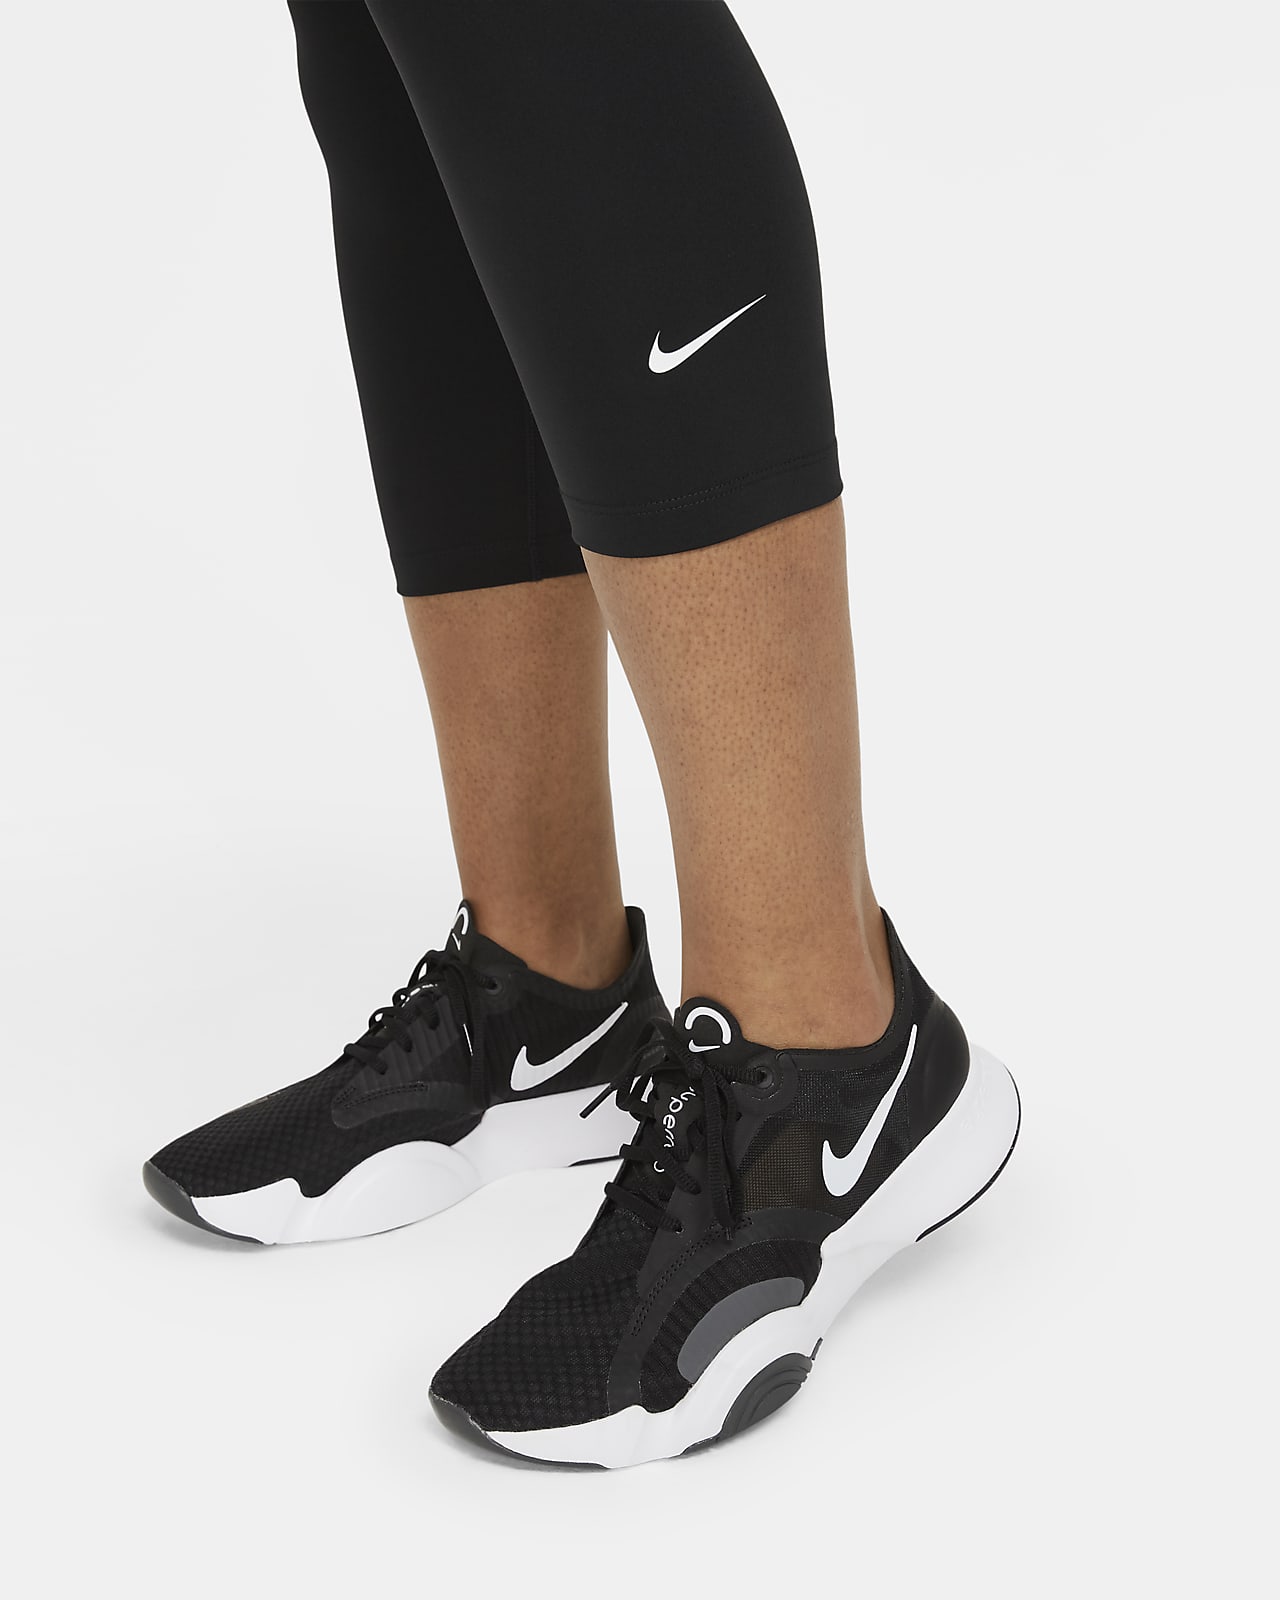 Nike One Capri Leggings W   all about sports